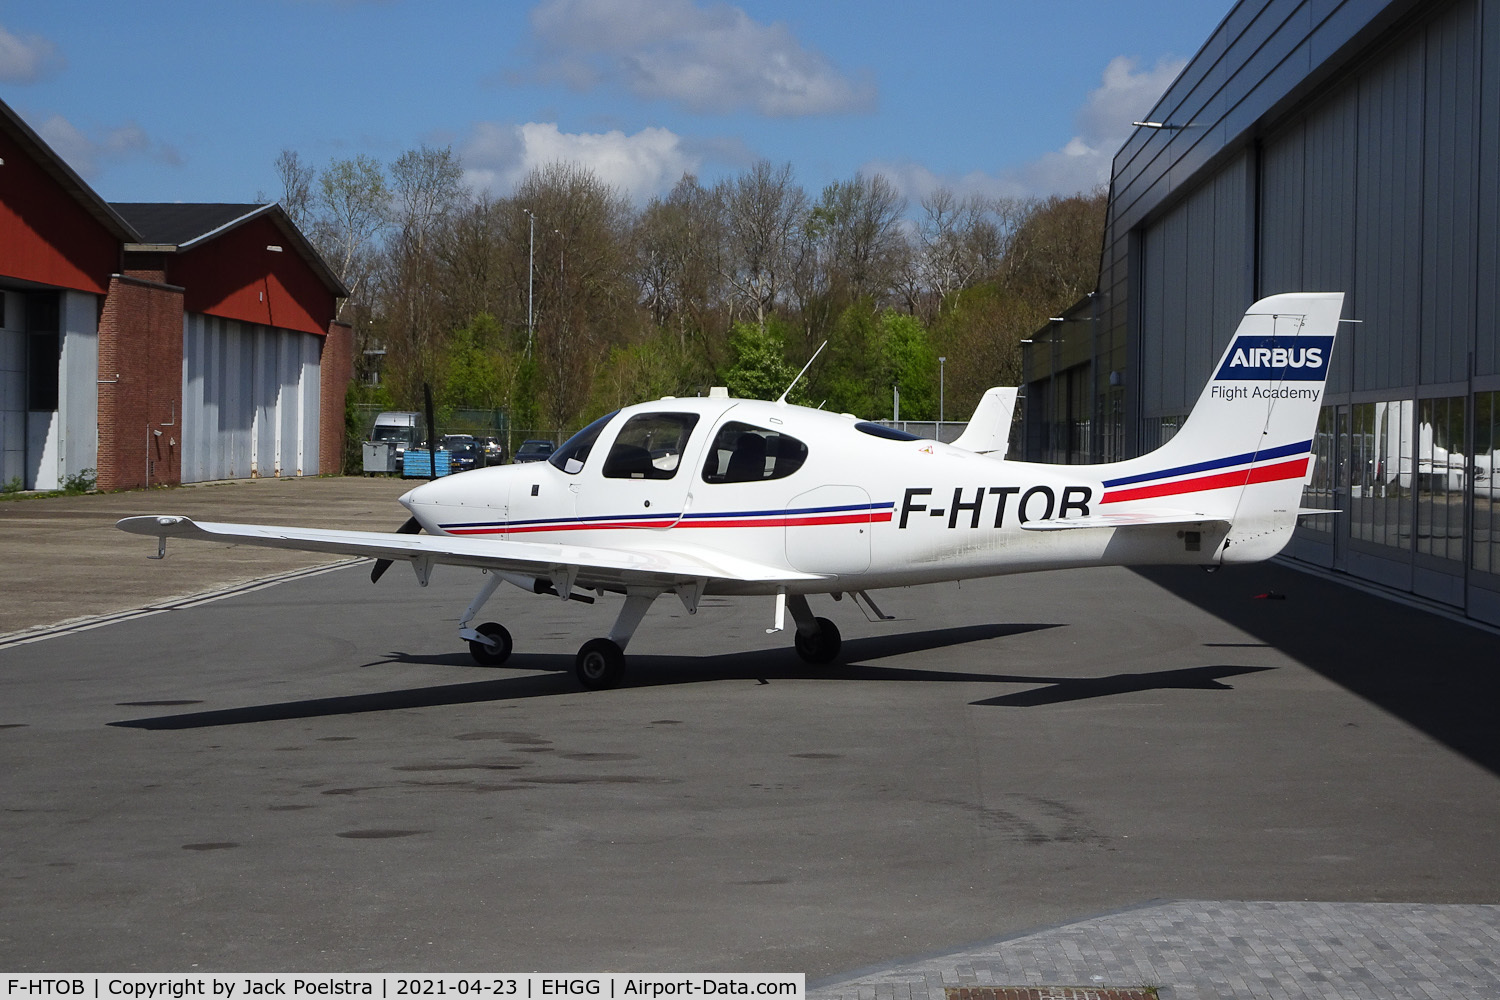 F-HTOB, Cirrus SR.20GS C/N 2041, F-HTOB of Airbus Flight Academy